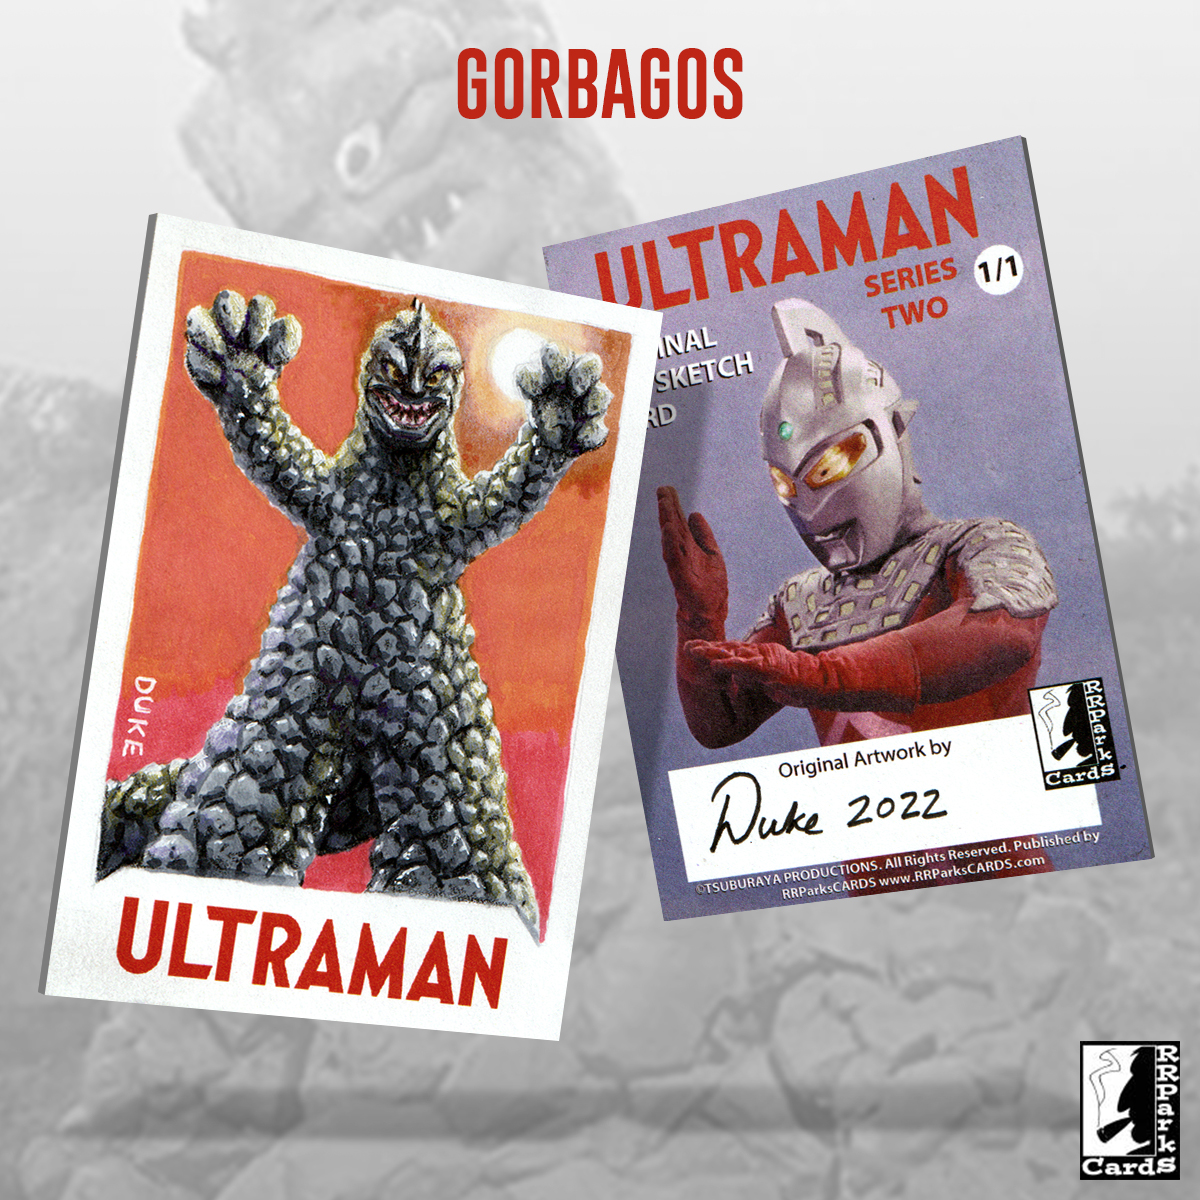 Ultraman Series 2 Gorbagos Sketch Card by Duke